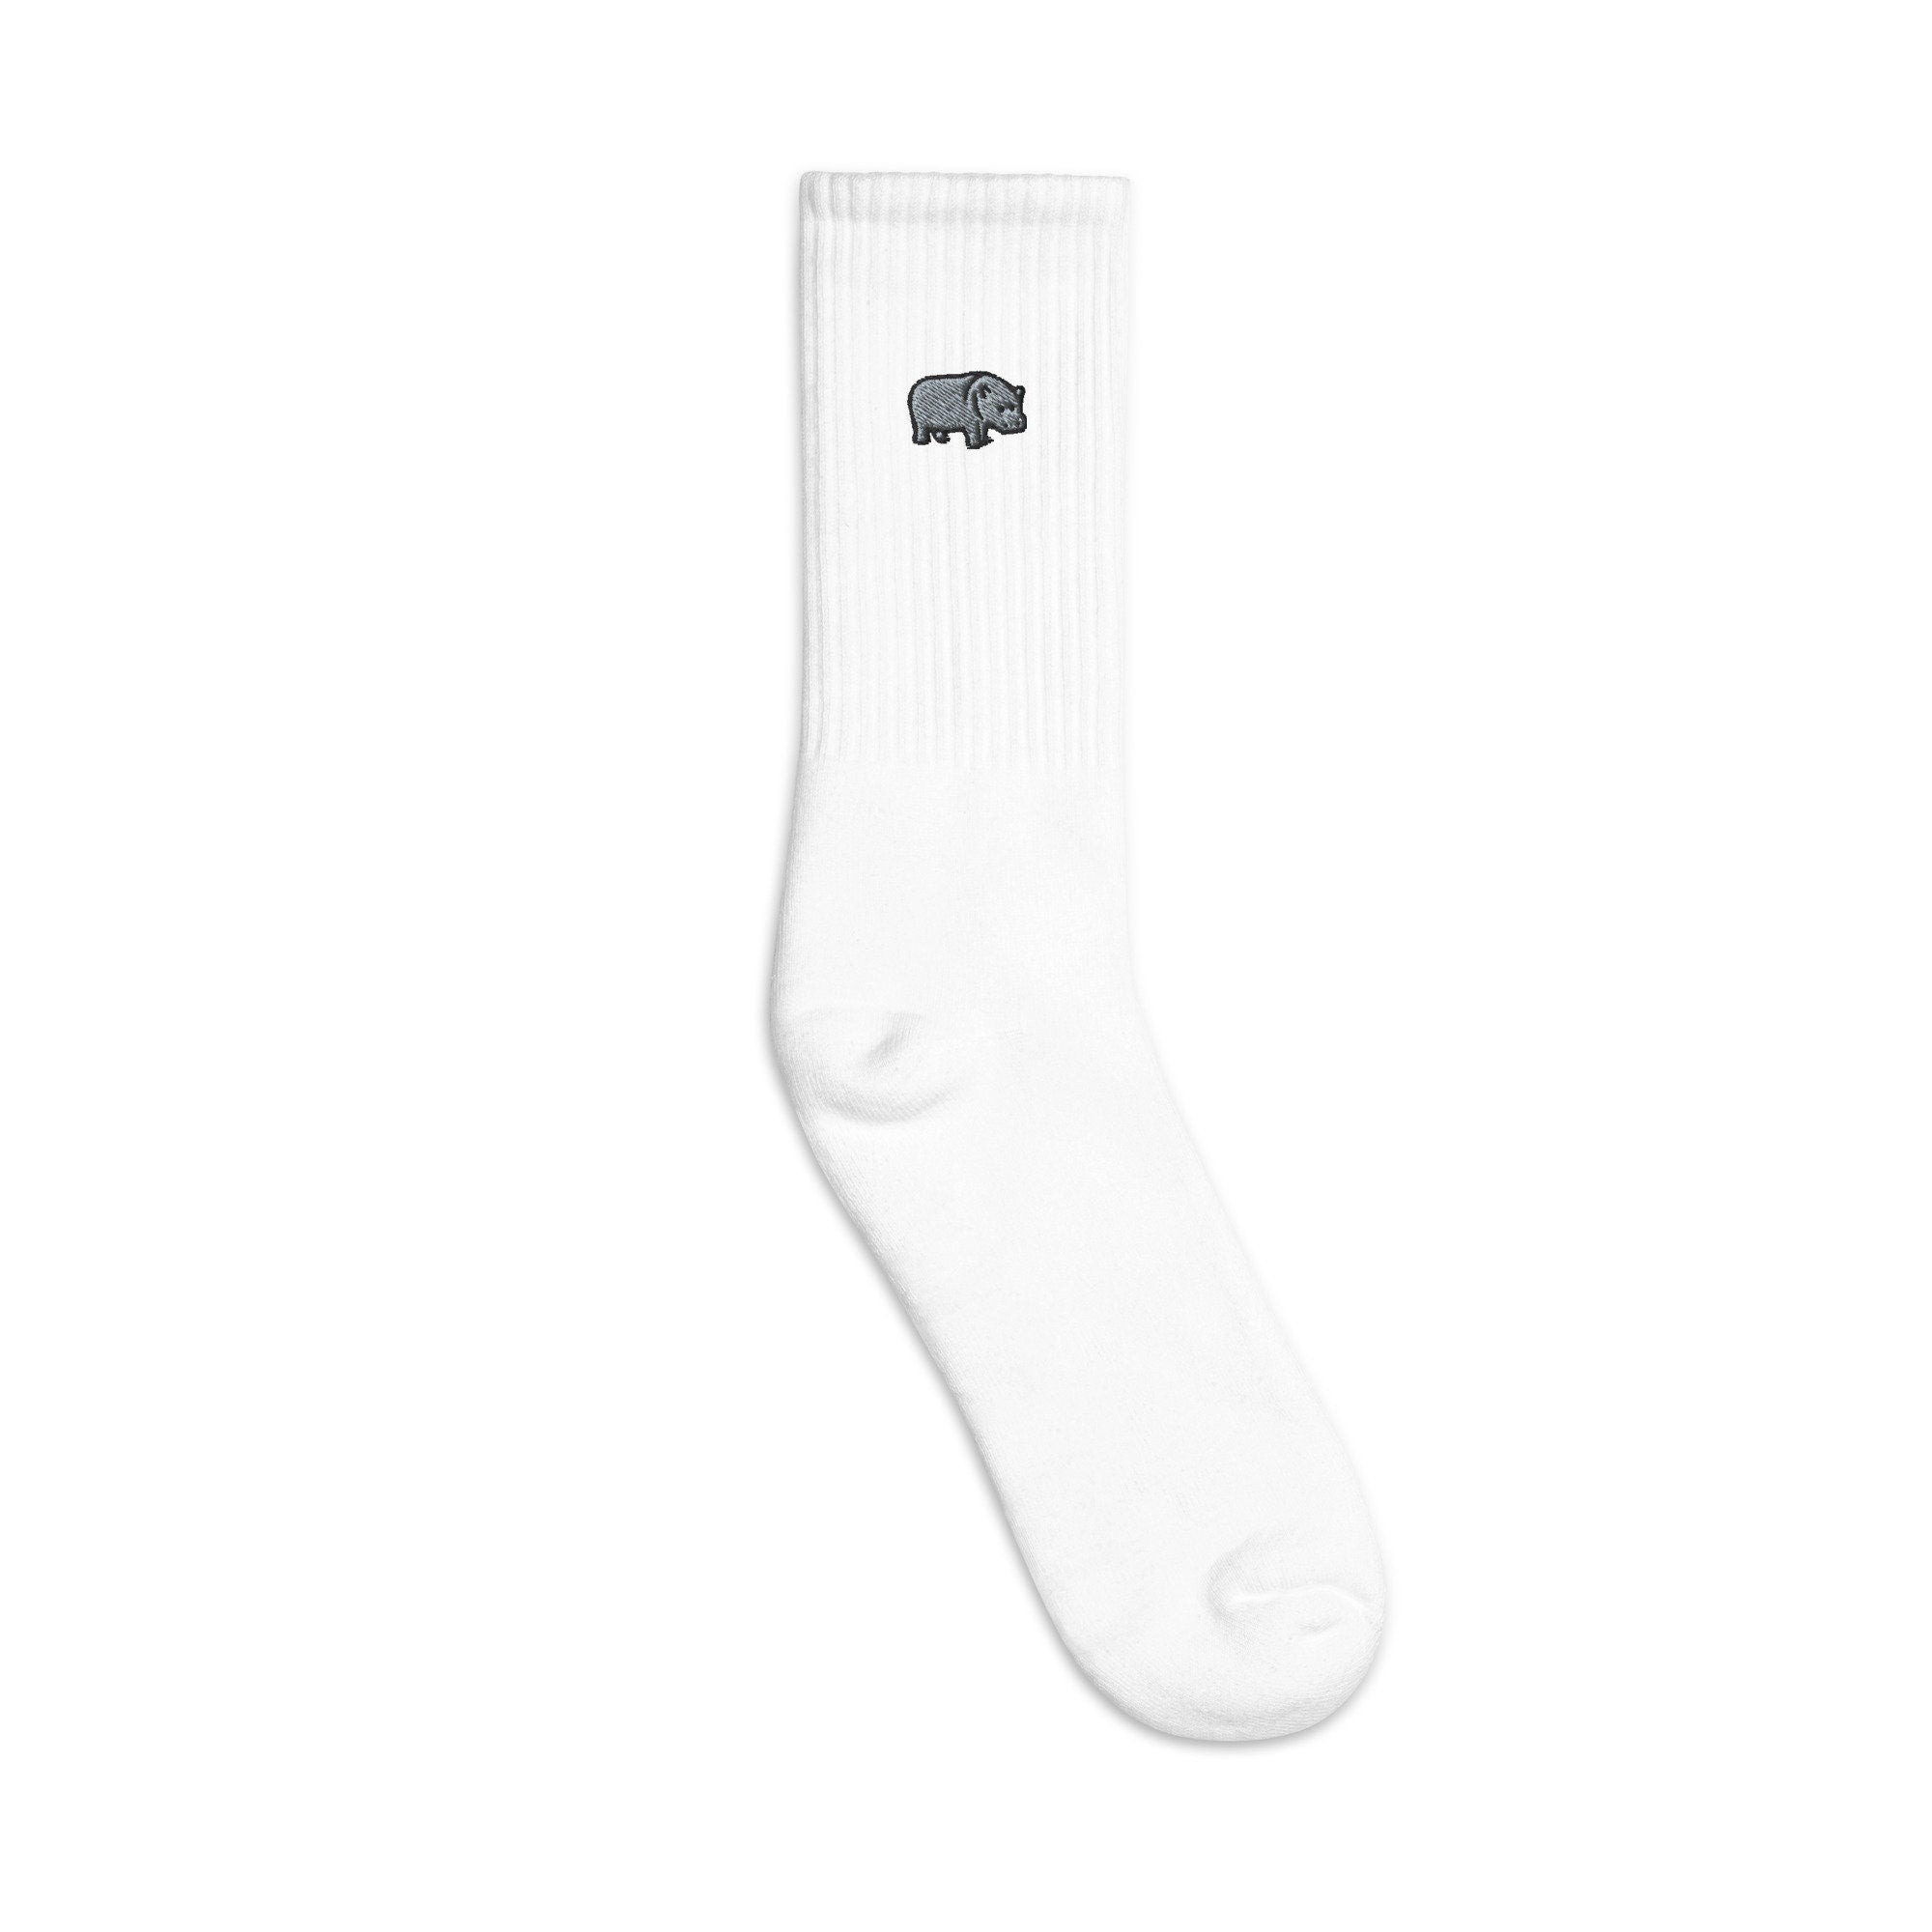 Hippo Embroidered Socks, Premium Embroidered Socks, Long Socks Gift - Multiple Colors